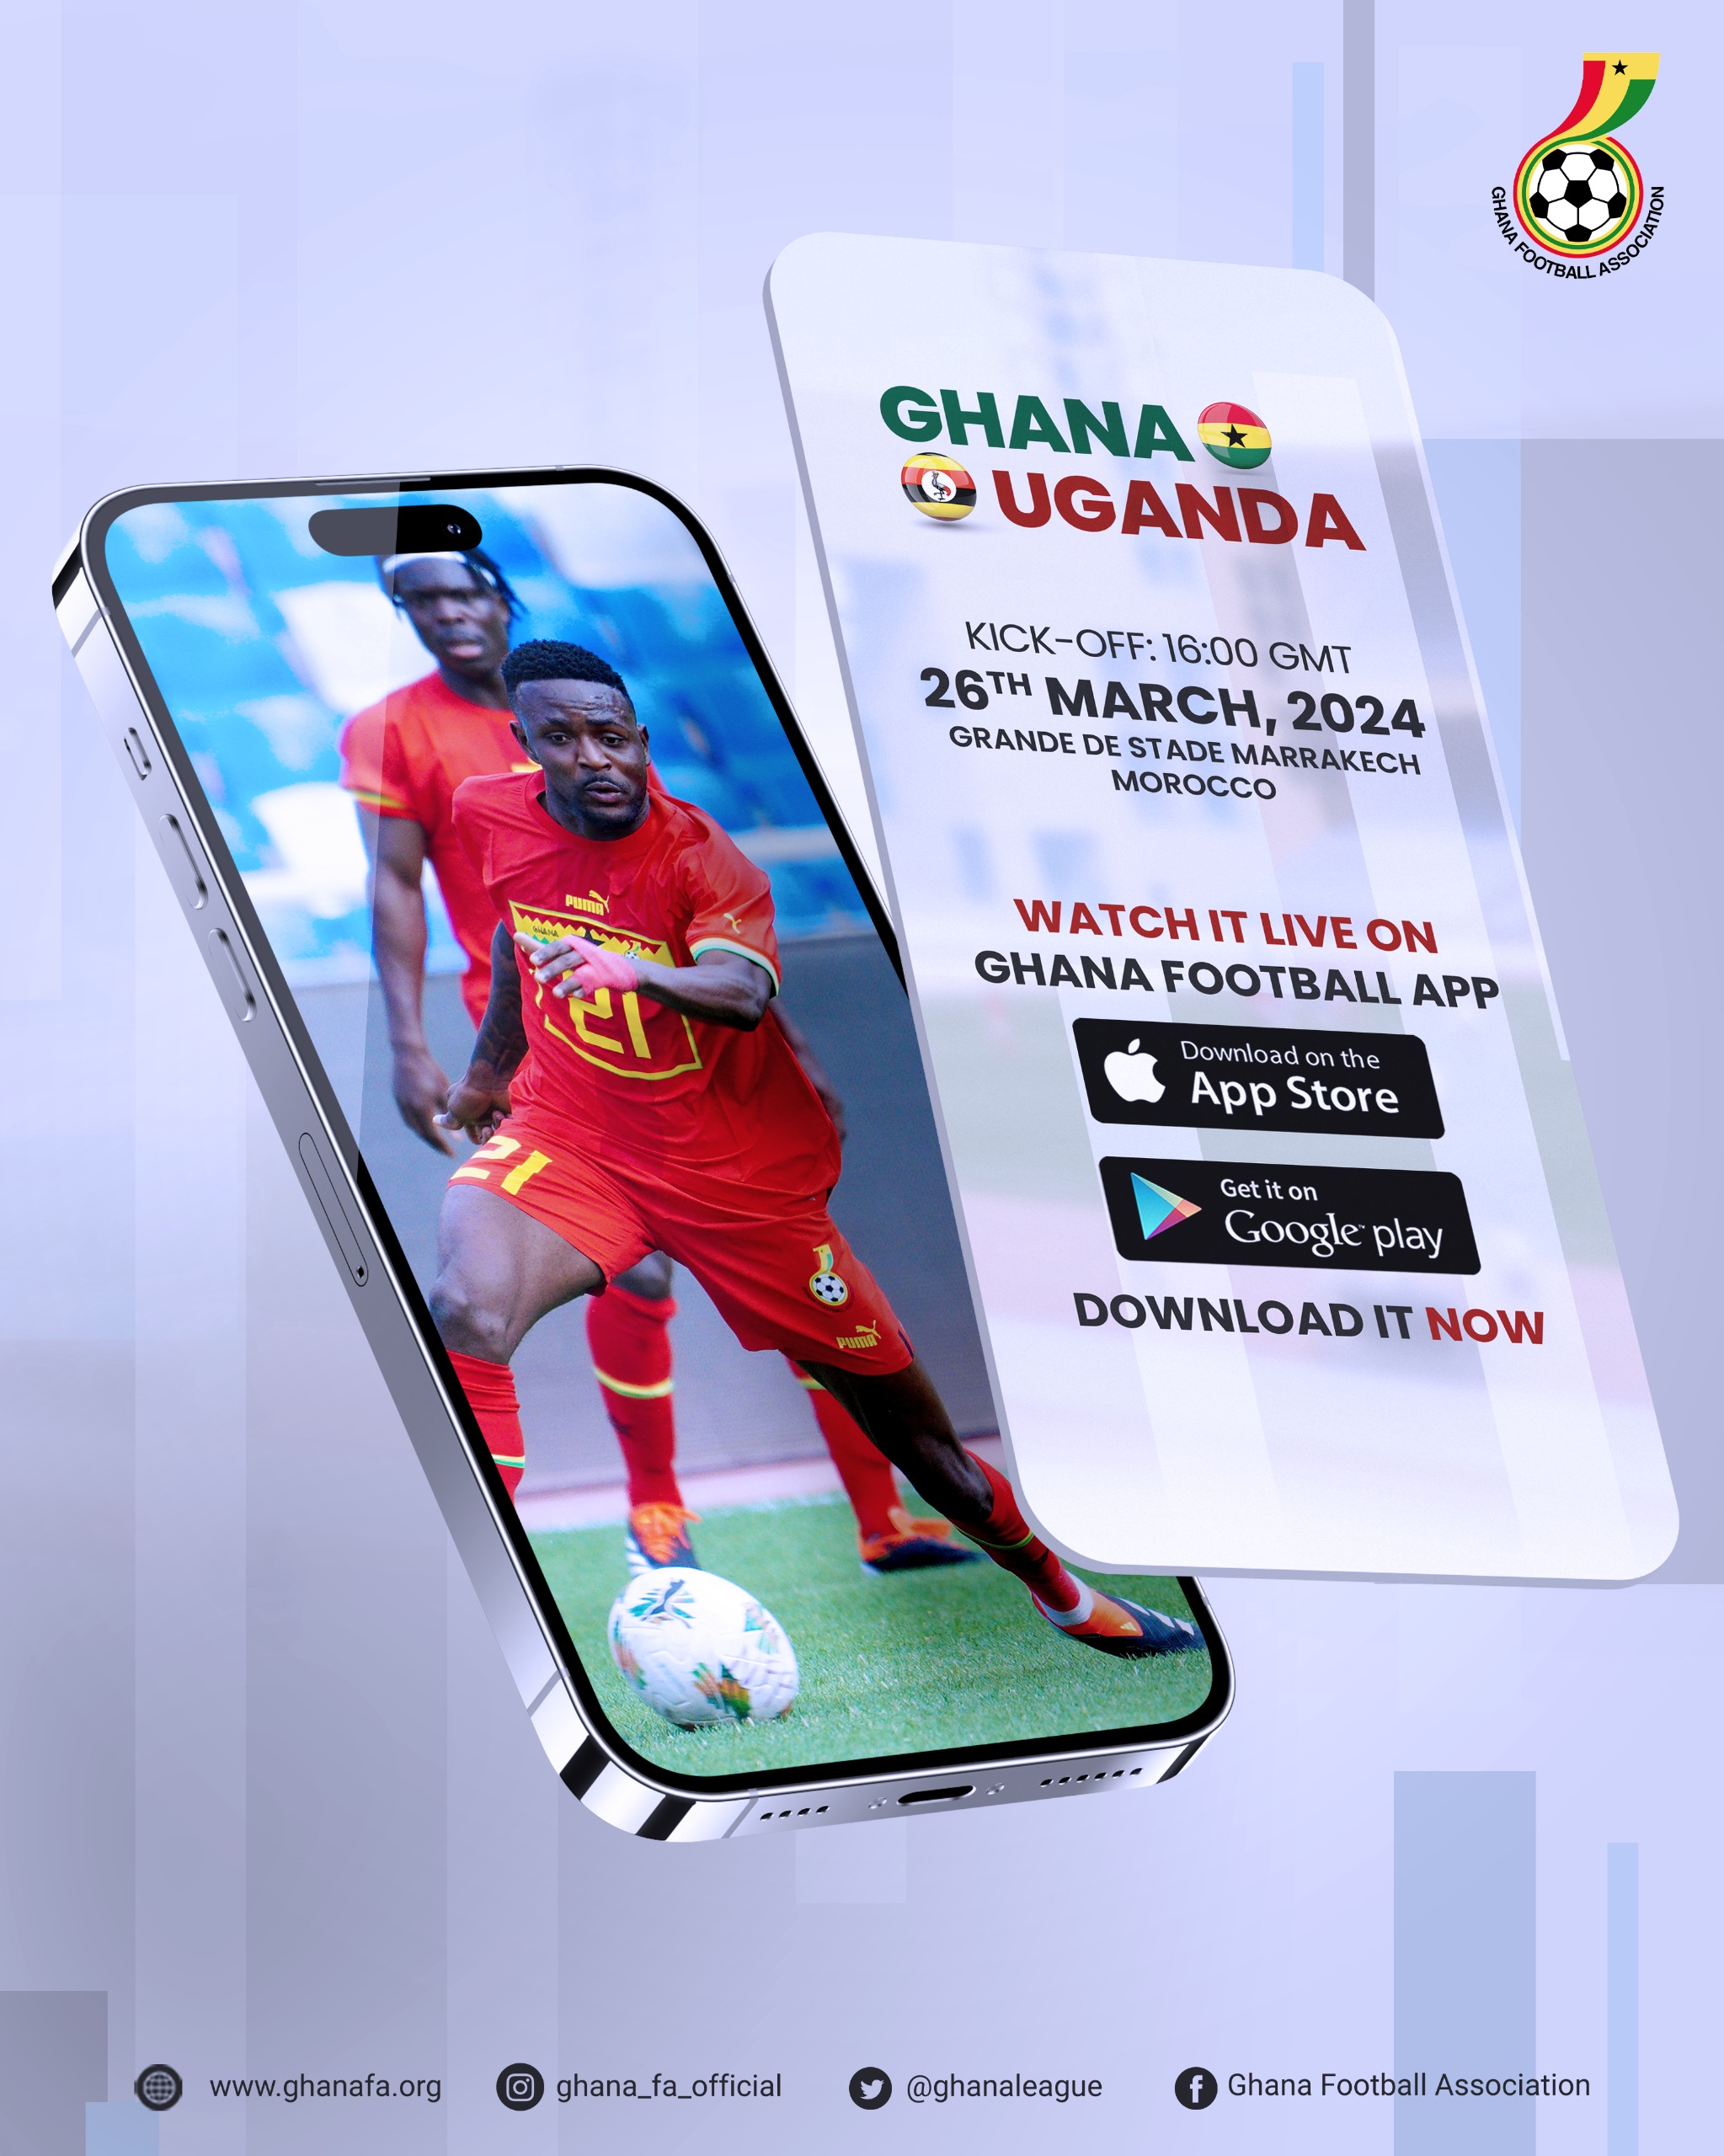 Ghana vs Uganda friendly to stream live on Ghana Football App and YouTube